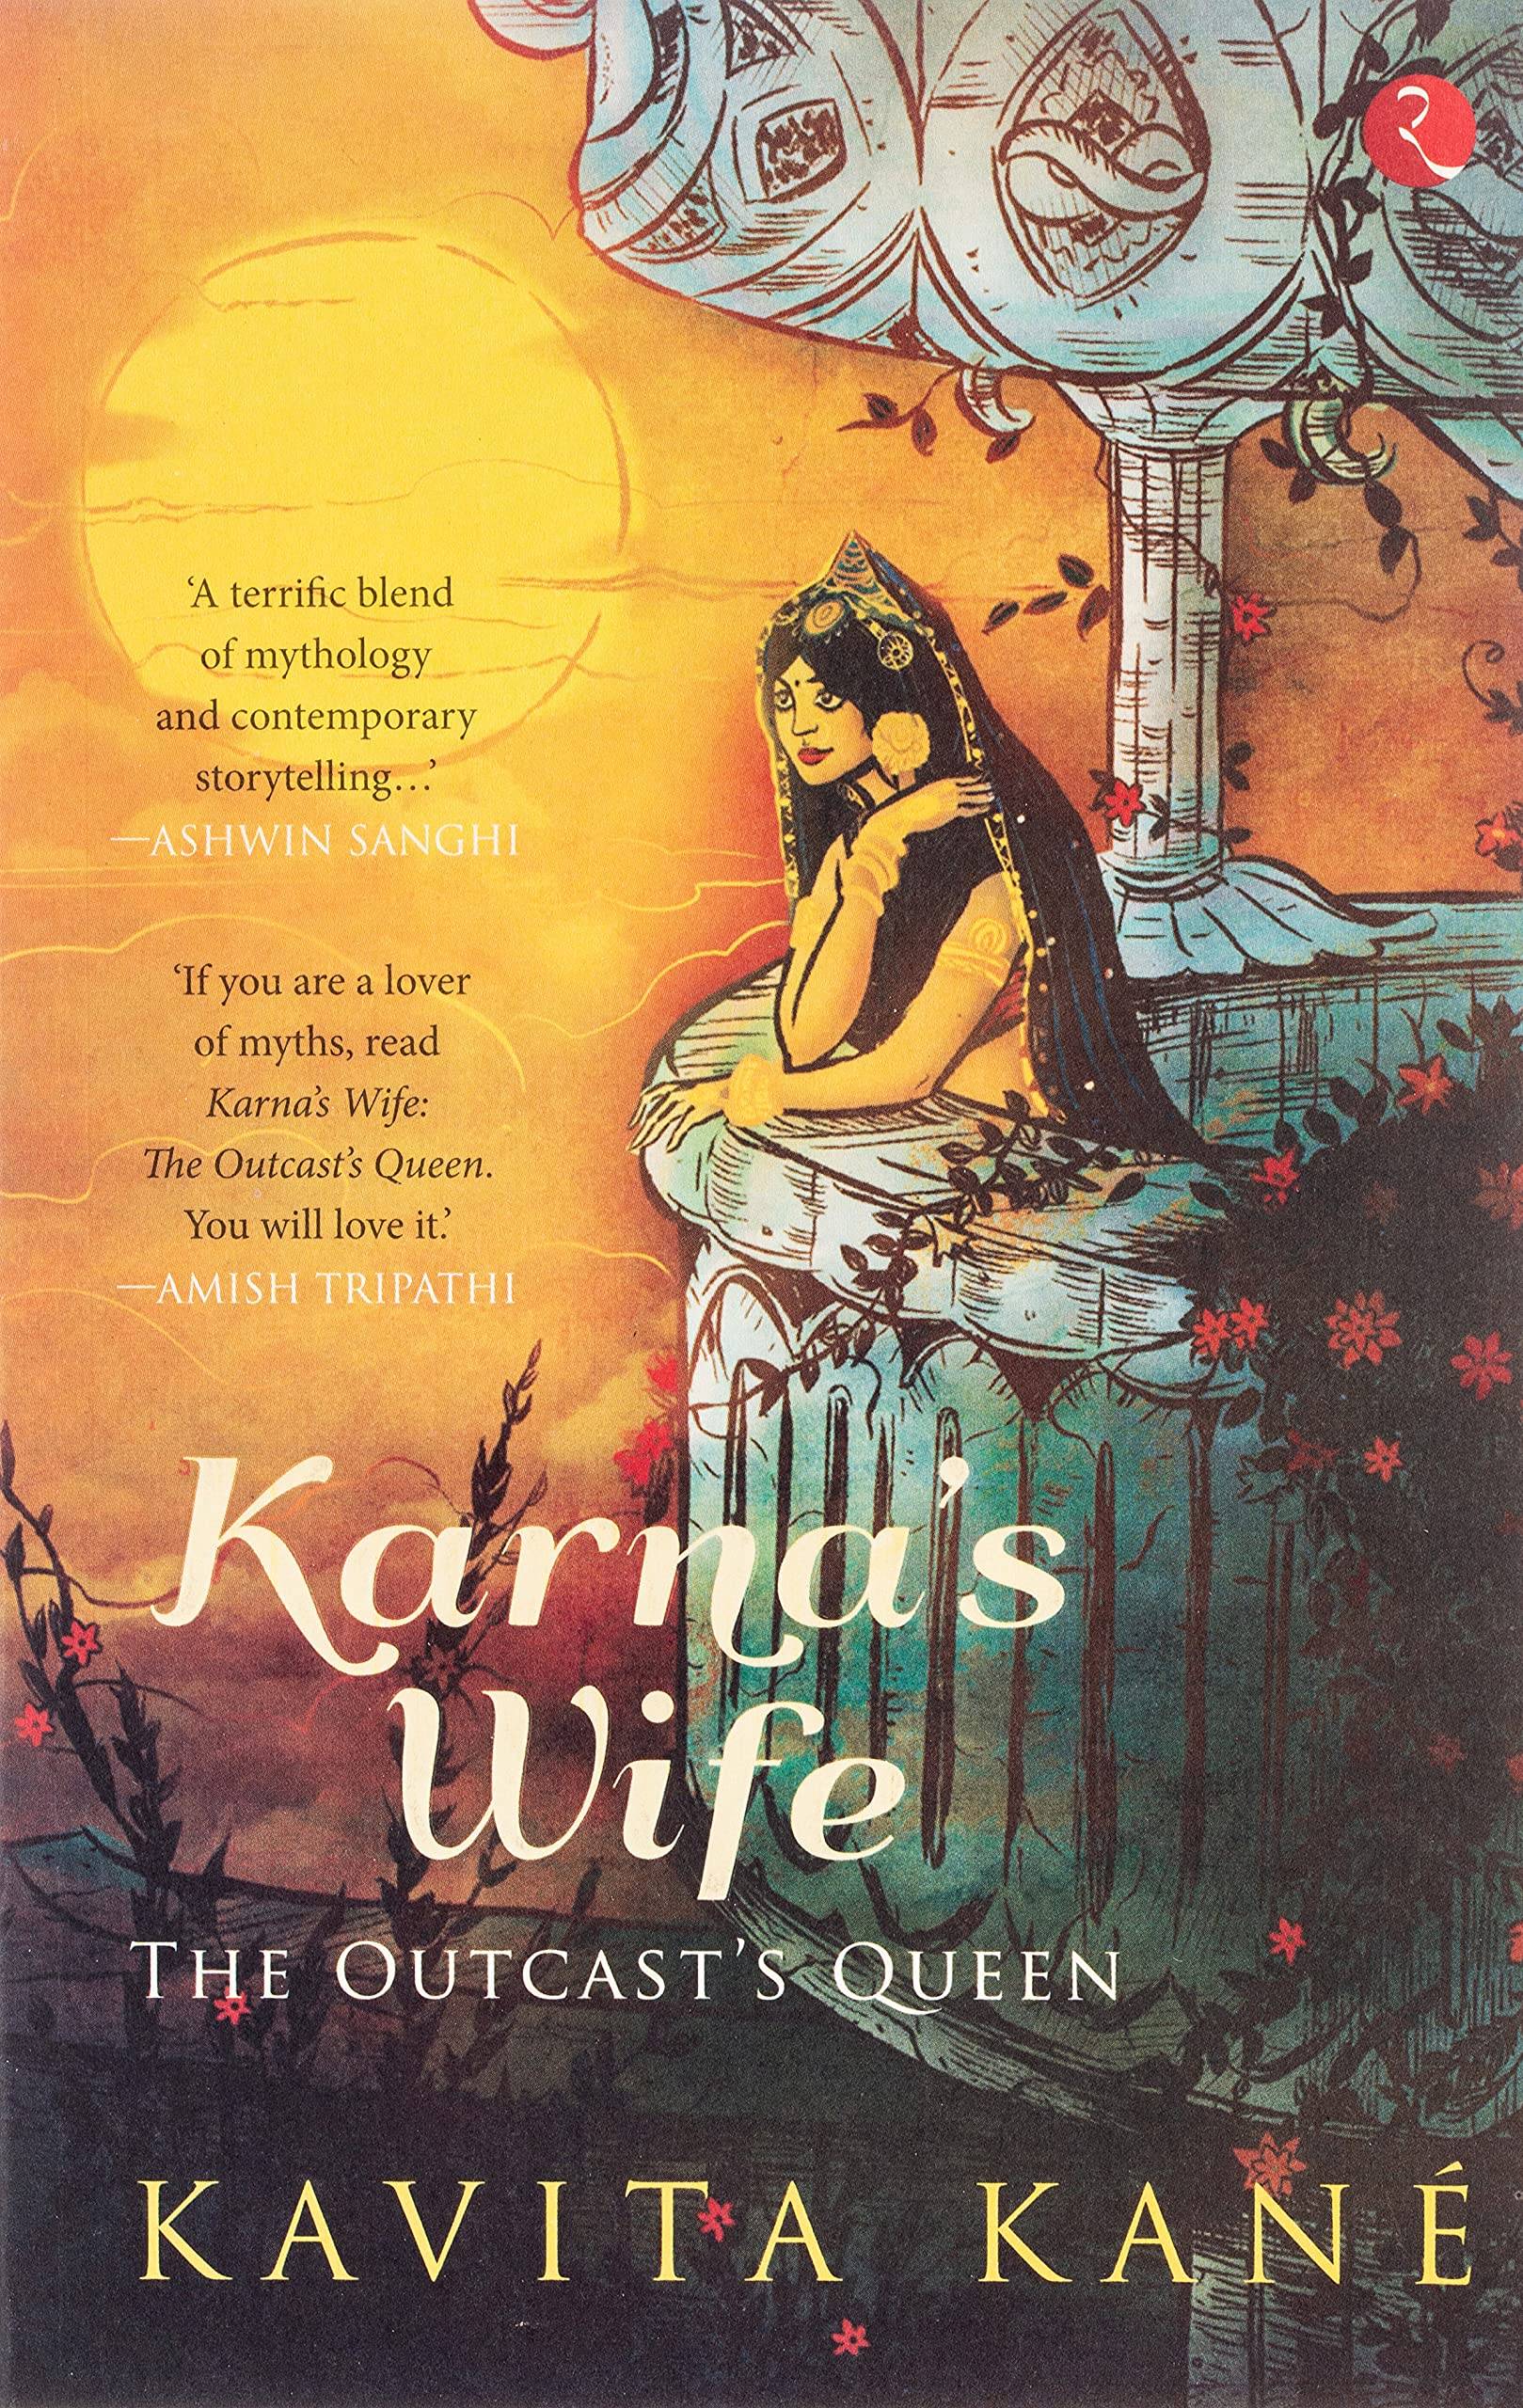 Karna's wife by kavita kane